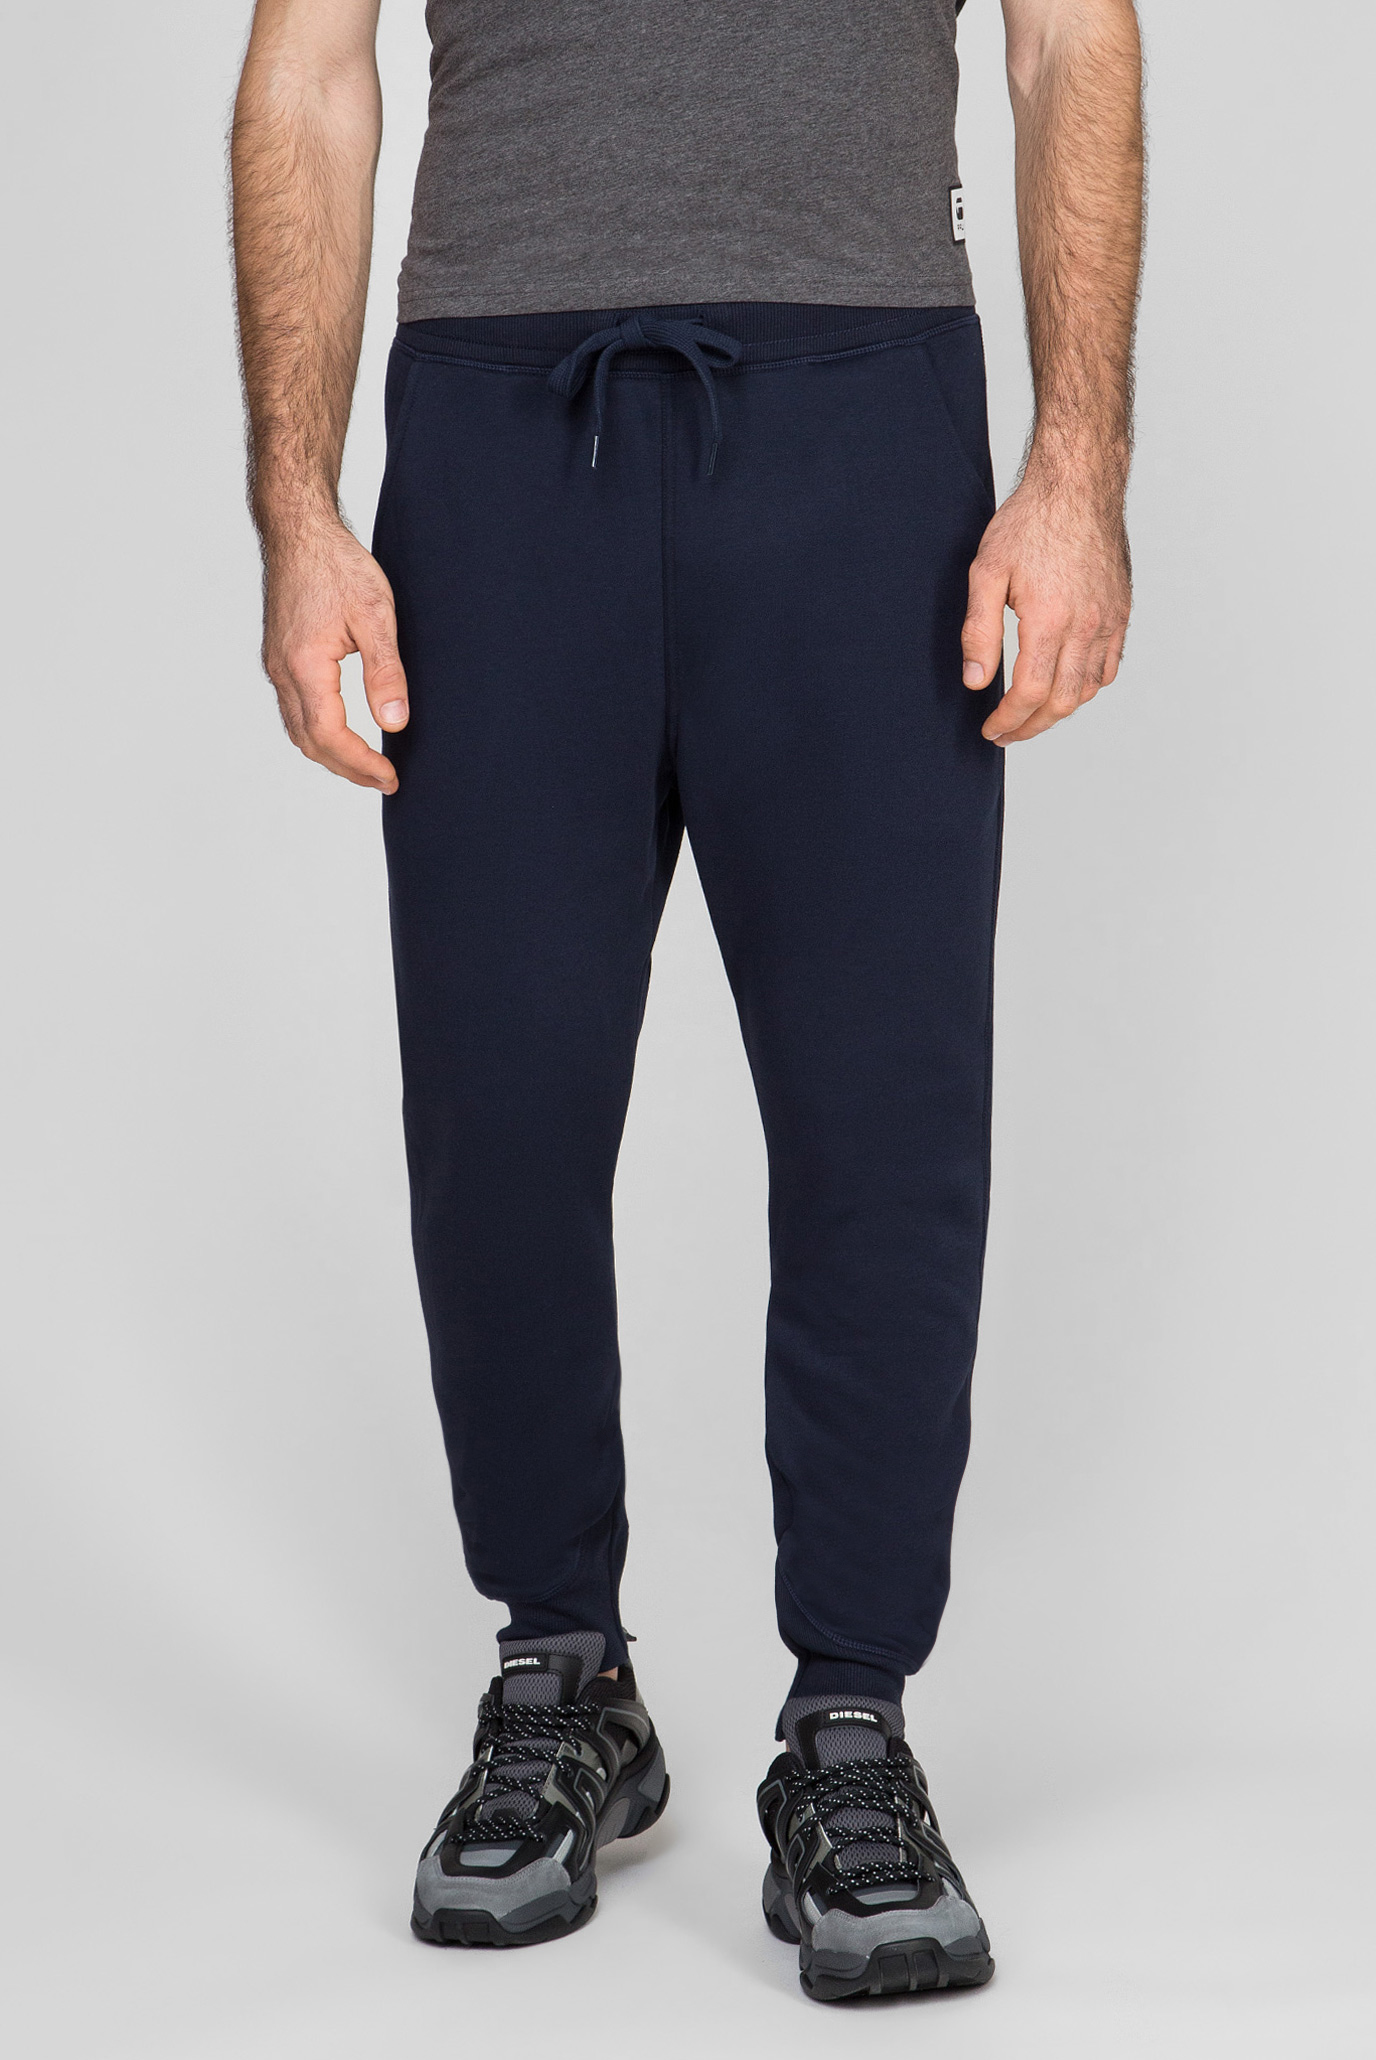 Мужские темно-синие спортивные брюки Premium core type 1